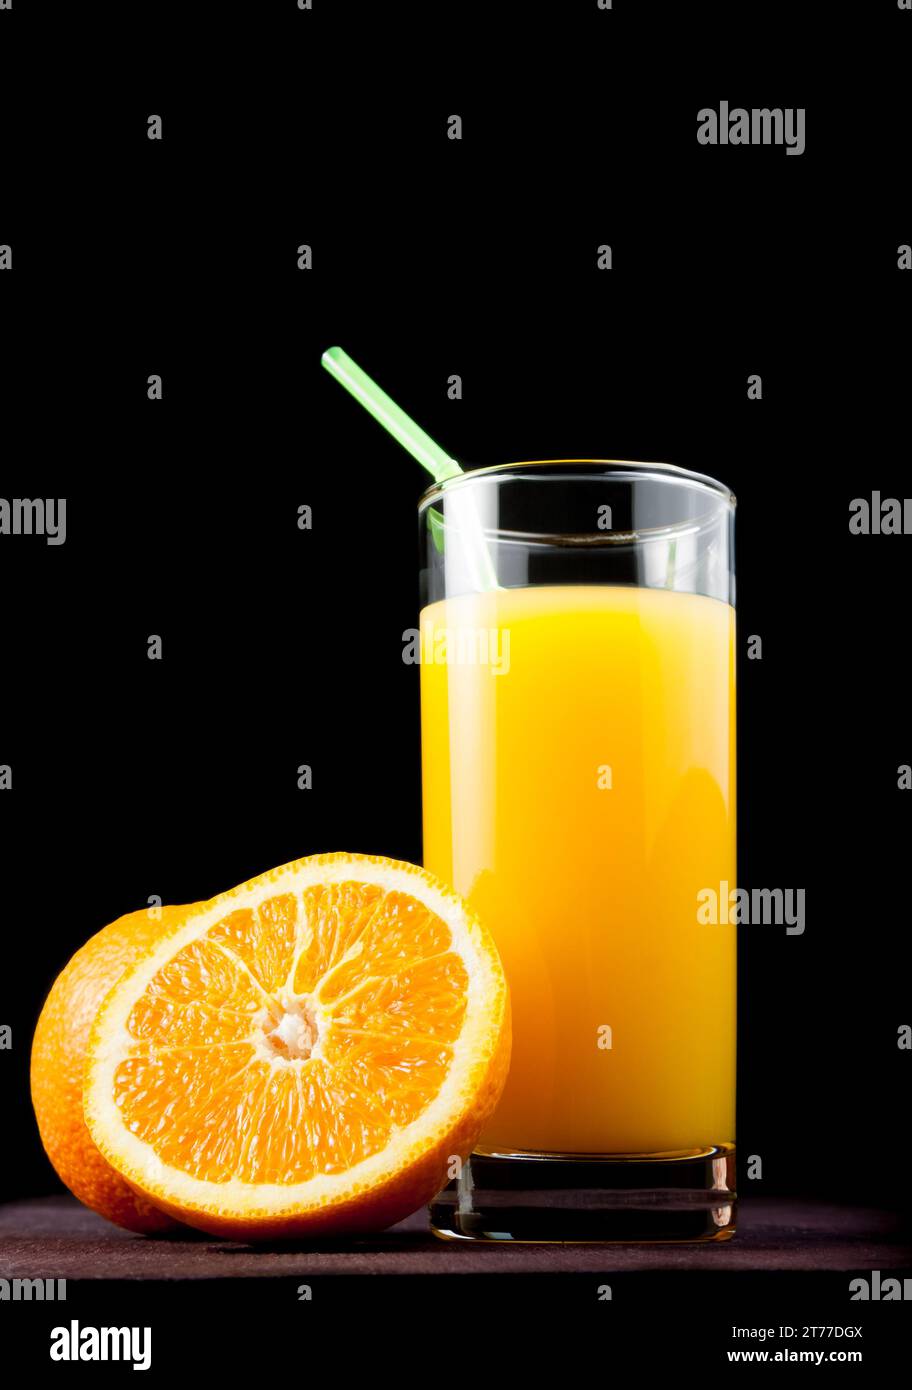 full glass of orange juice with straw near half orange on black background Stock Photo